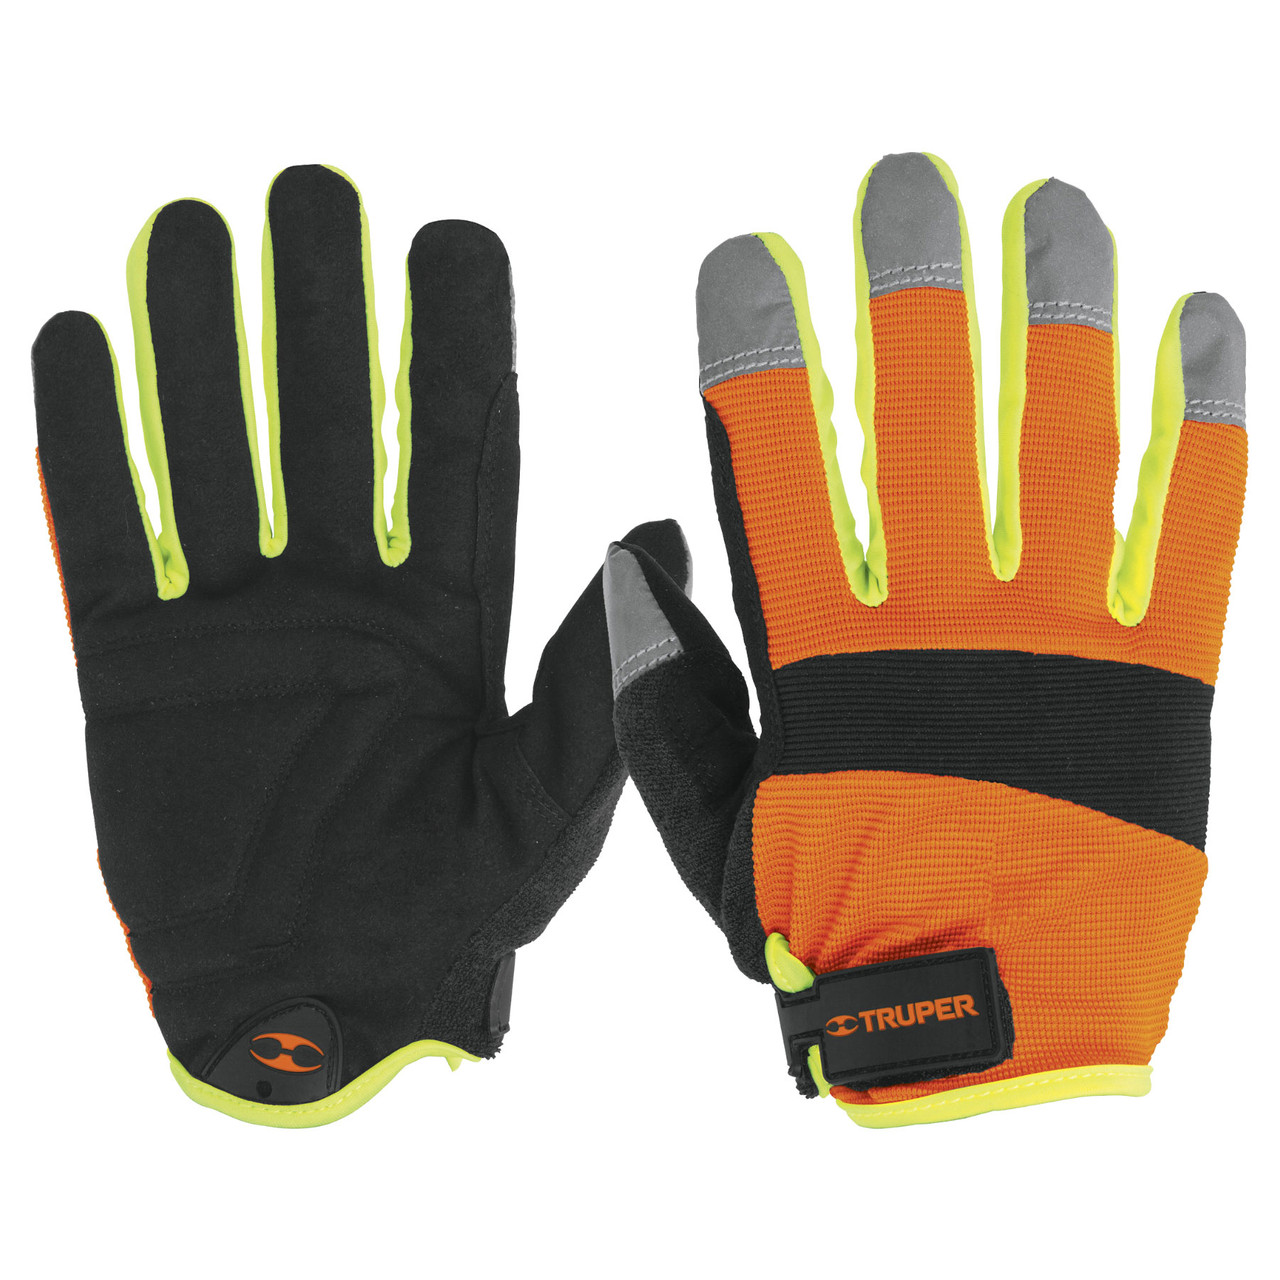 Truper High-visibility, Mechanic Gloves #10849